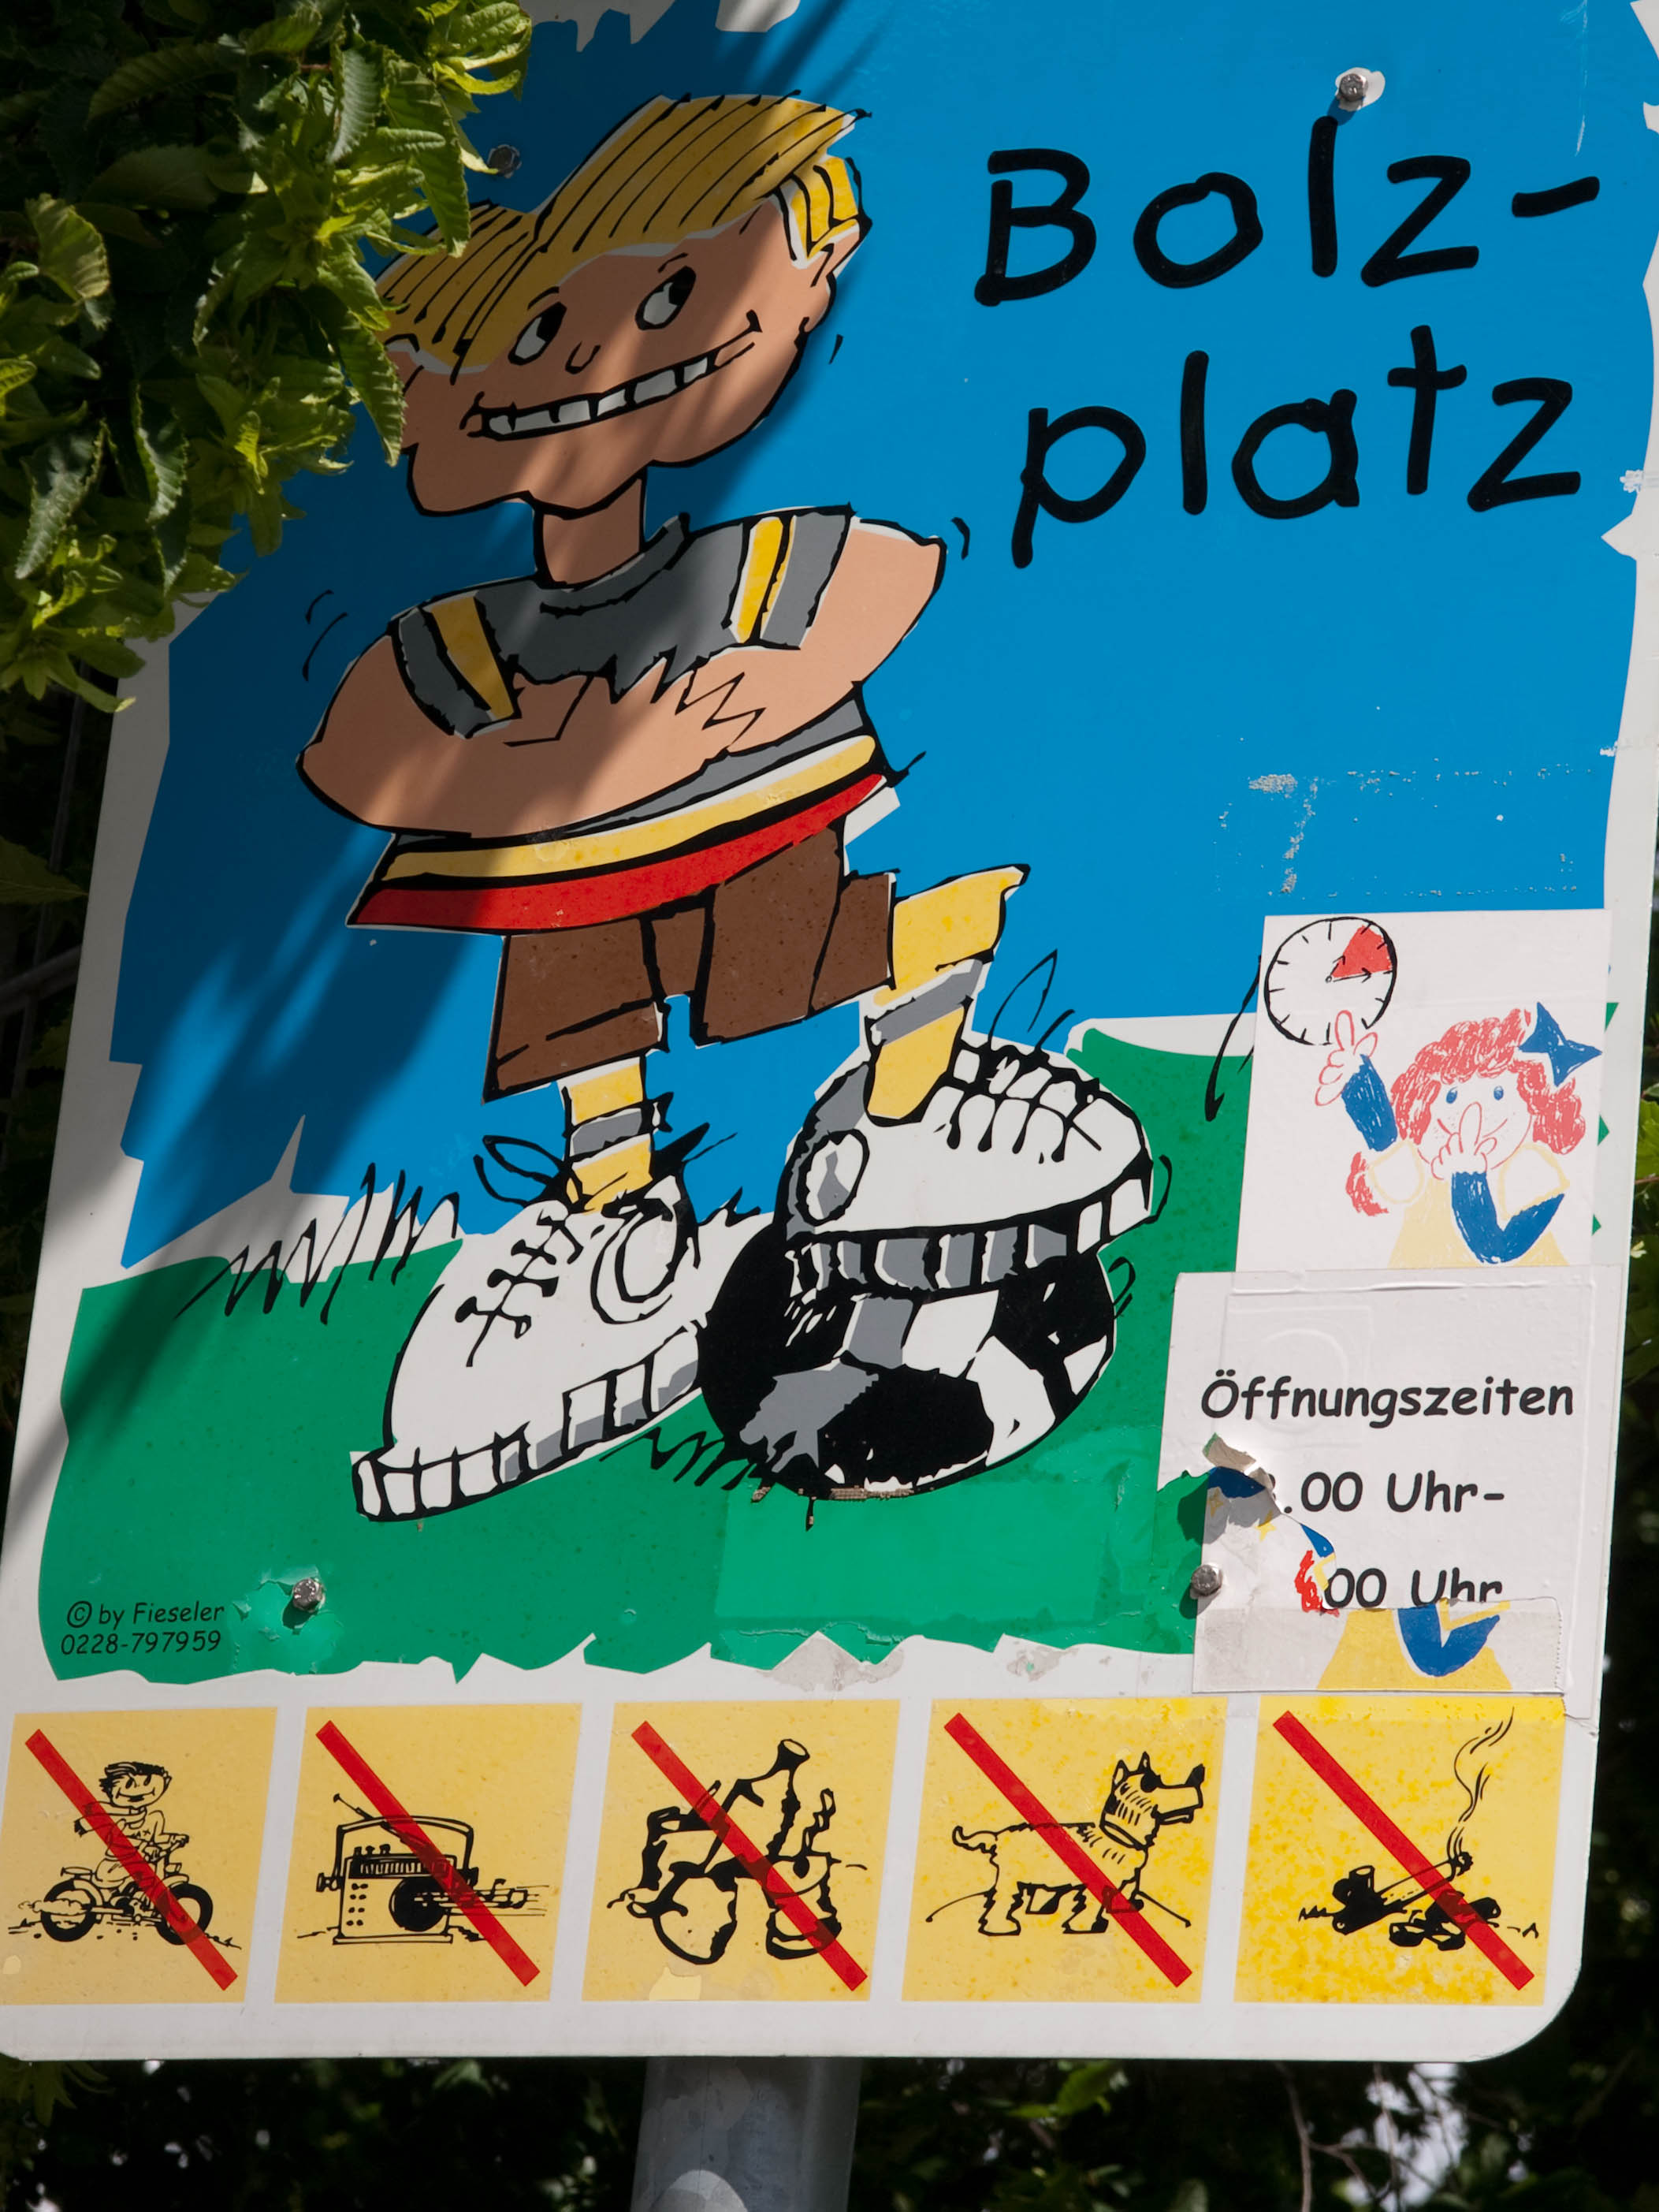 Datei:Bolzplatz Sudetenring Schwetzingen-1.jpg